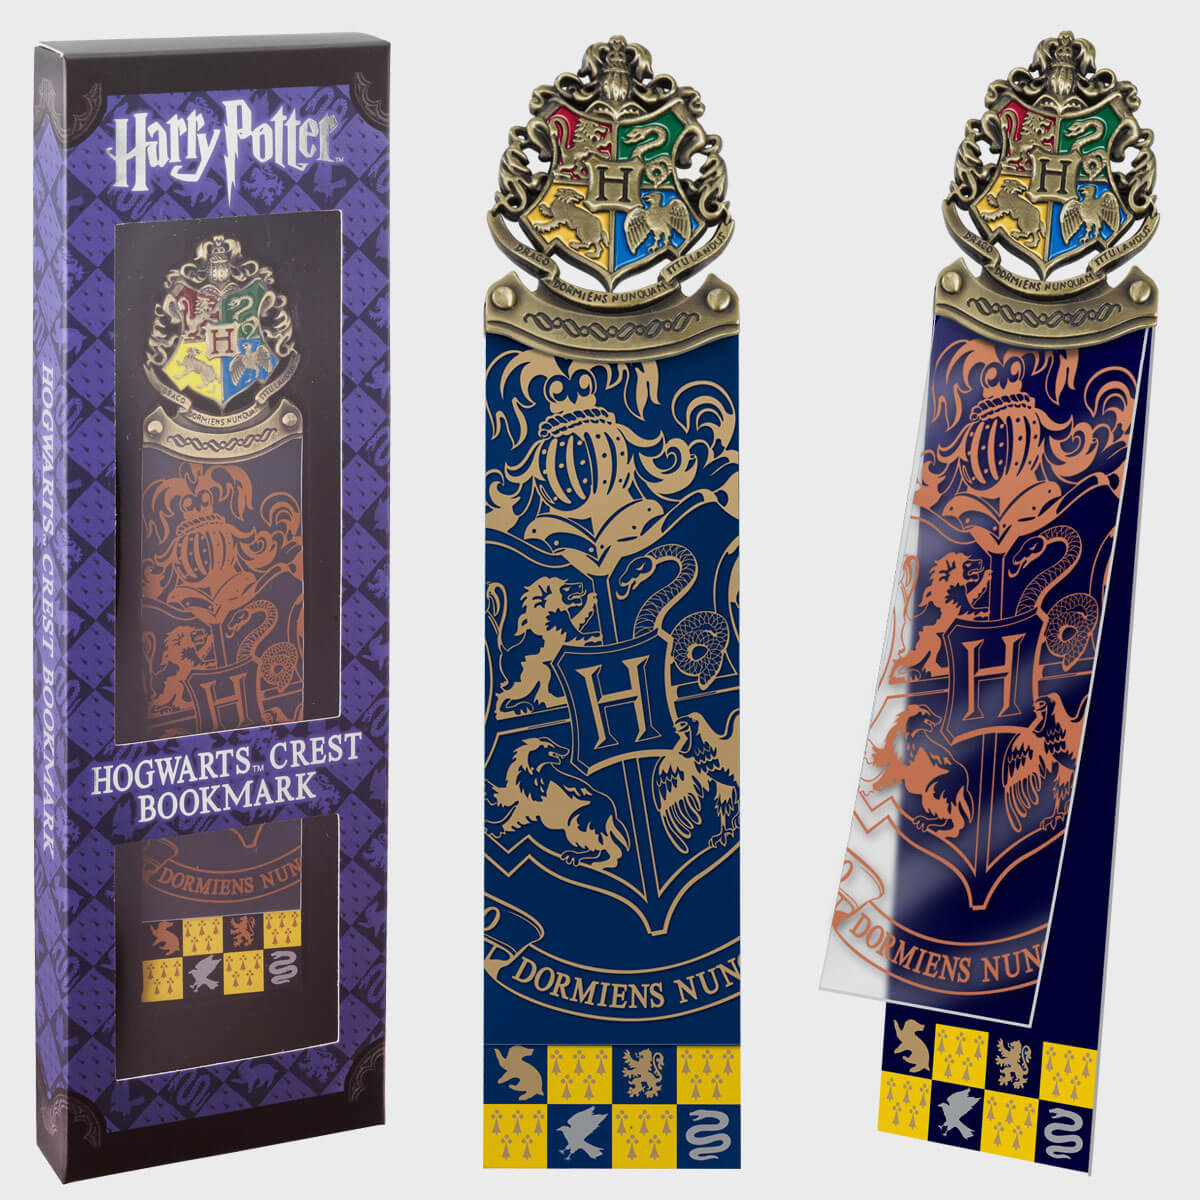 Harry Potter Hogwarts Bookmark